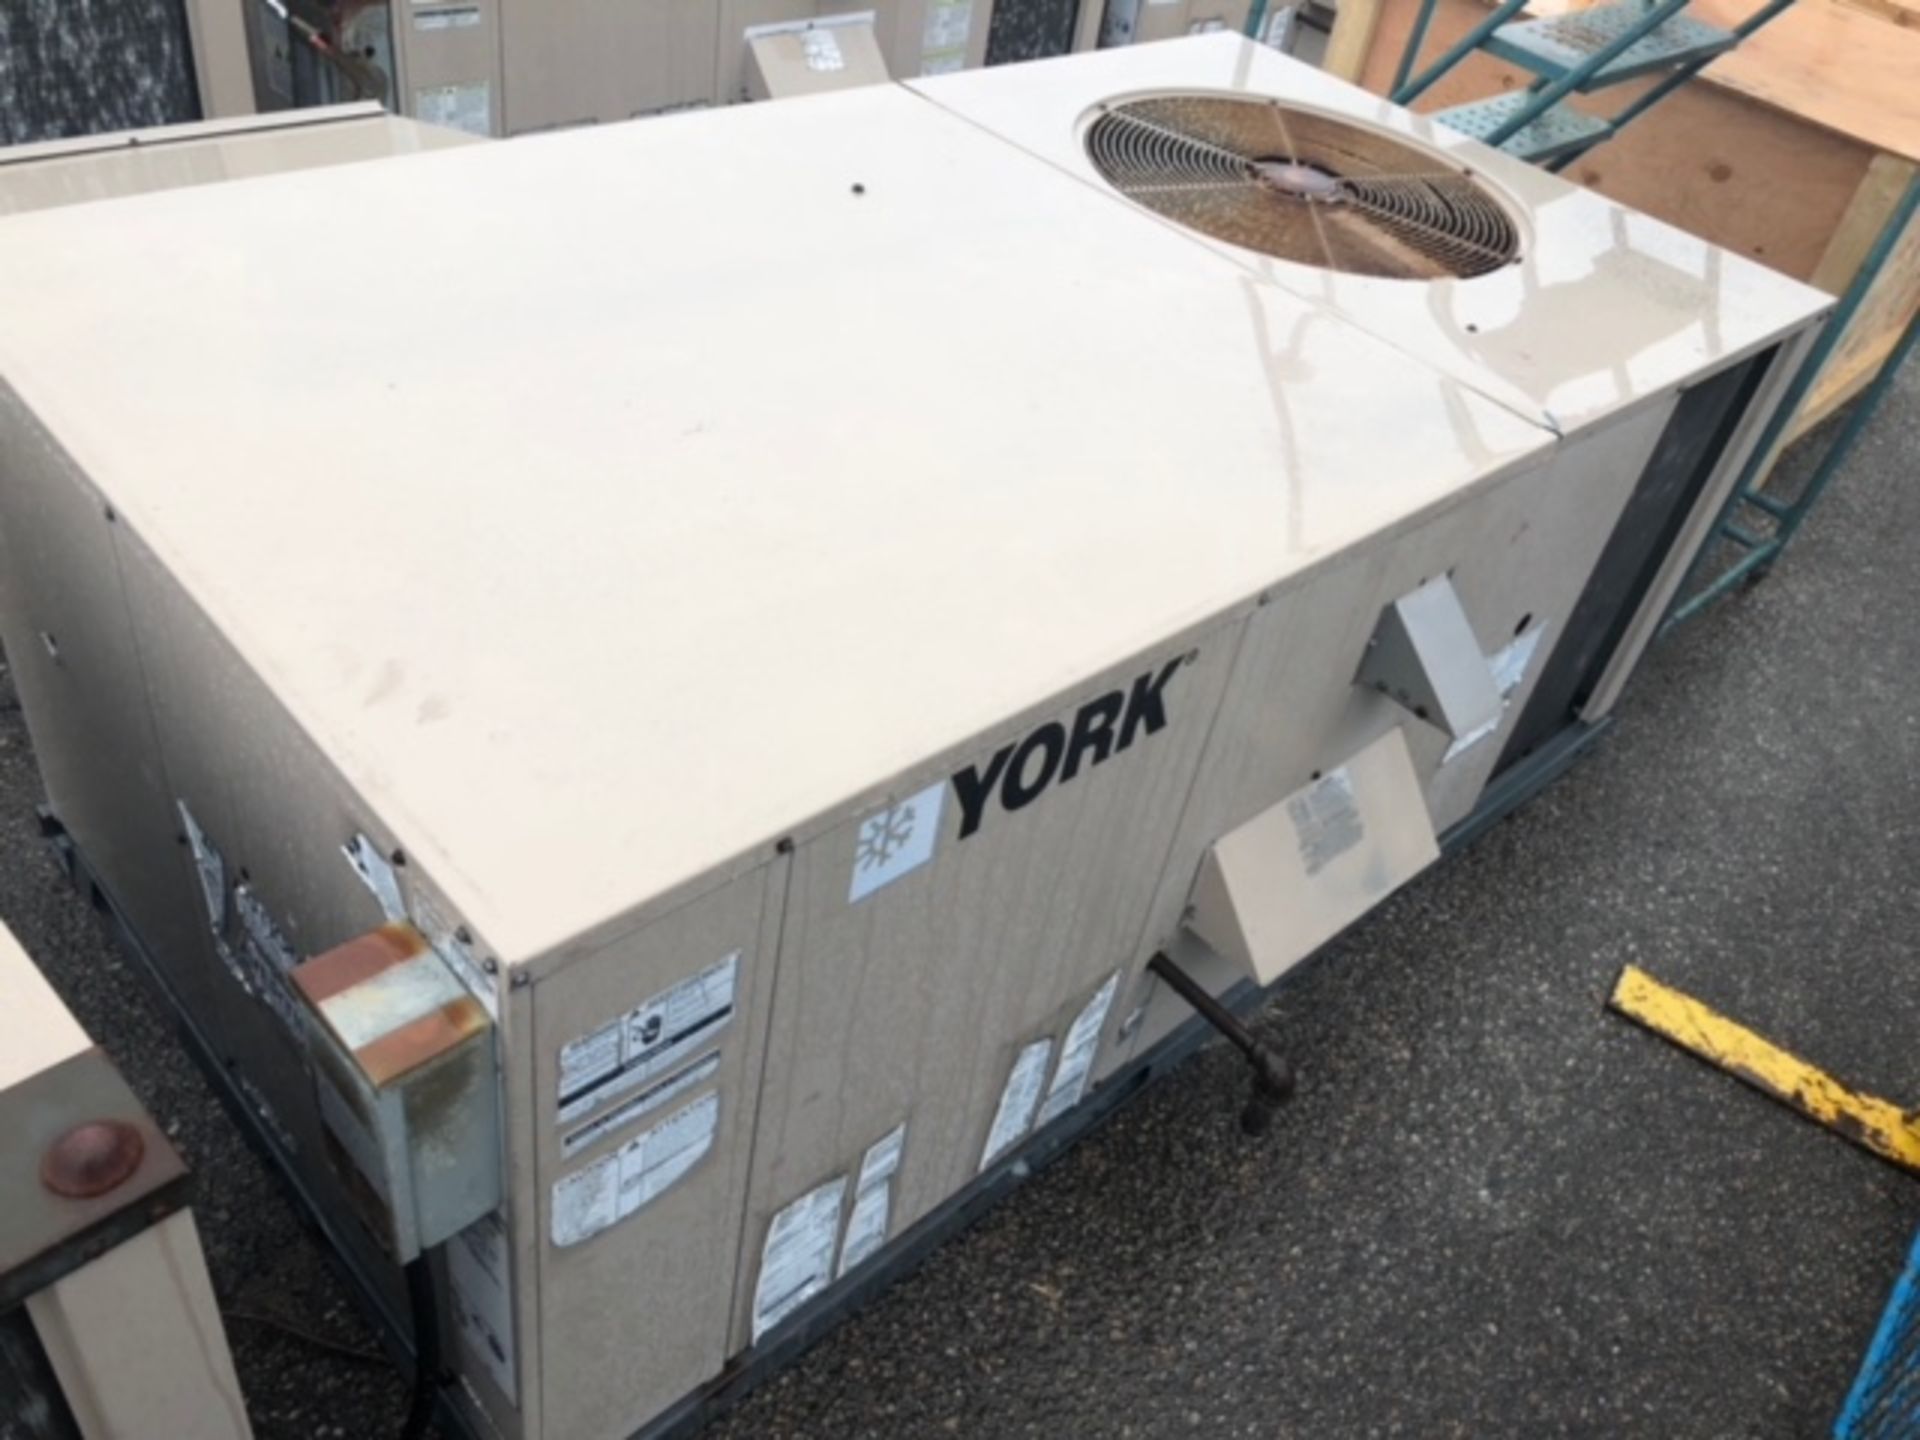 York Rooftop HVAC Unit, Model D7CG036N09925A, S/N NGJM089660 with R22 Refrigerant, 208/230 V